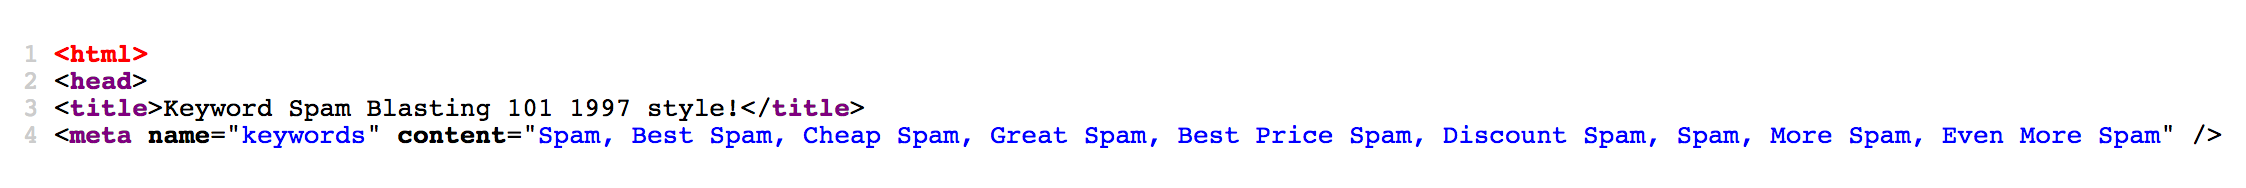 meta keyword spam example